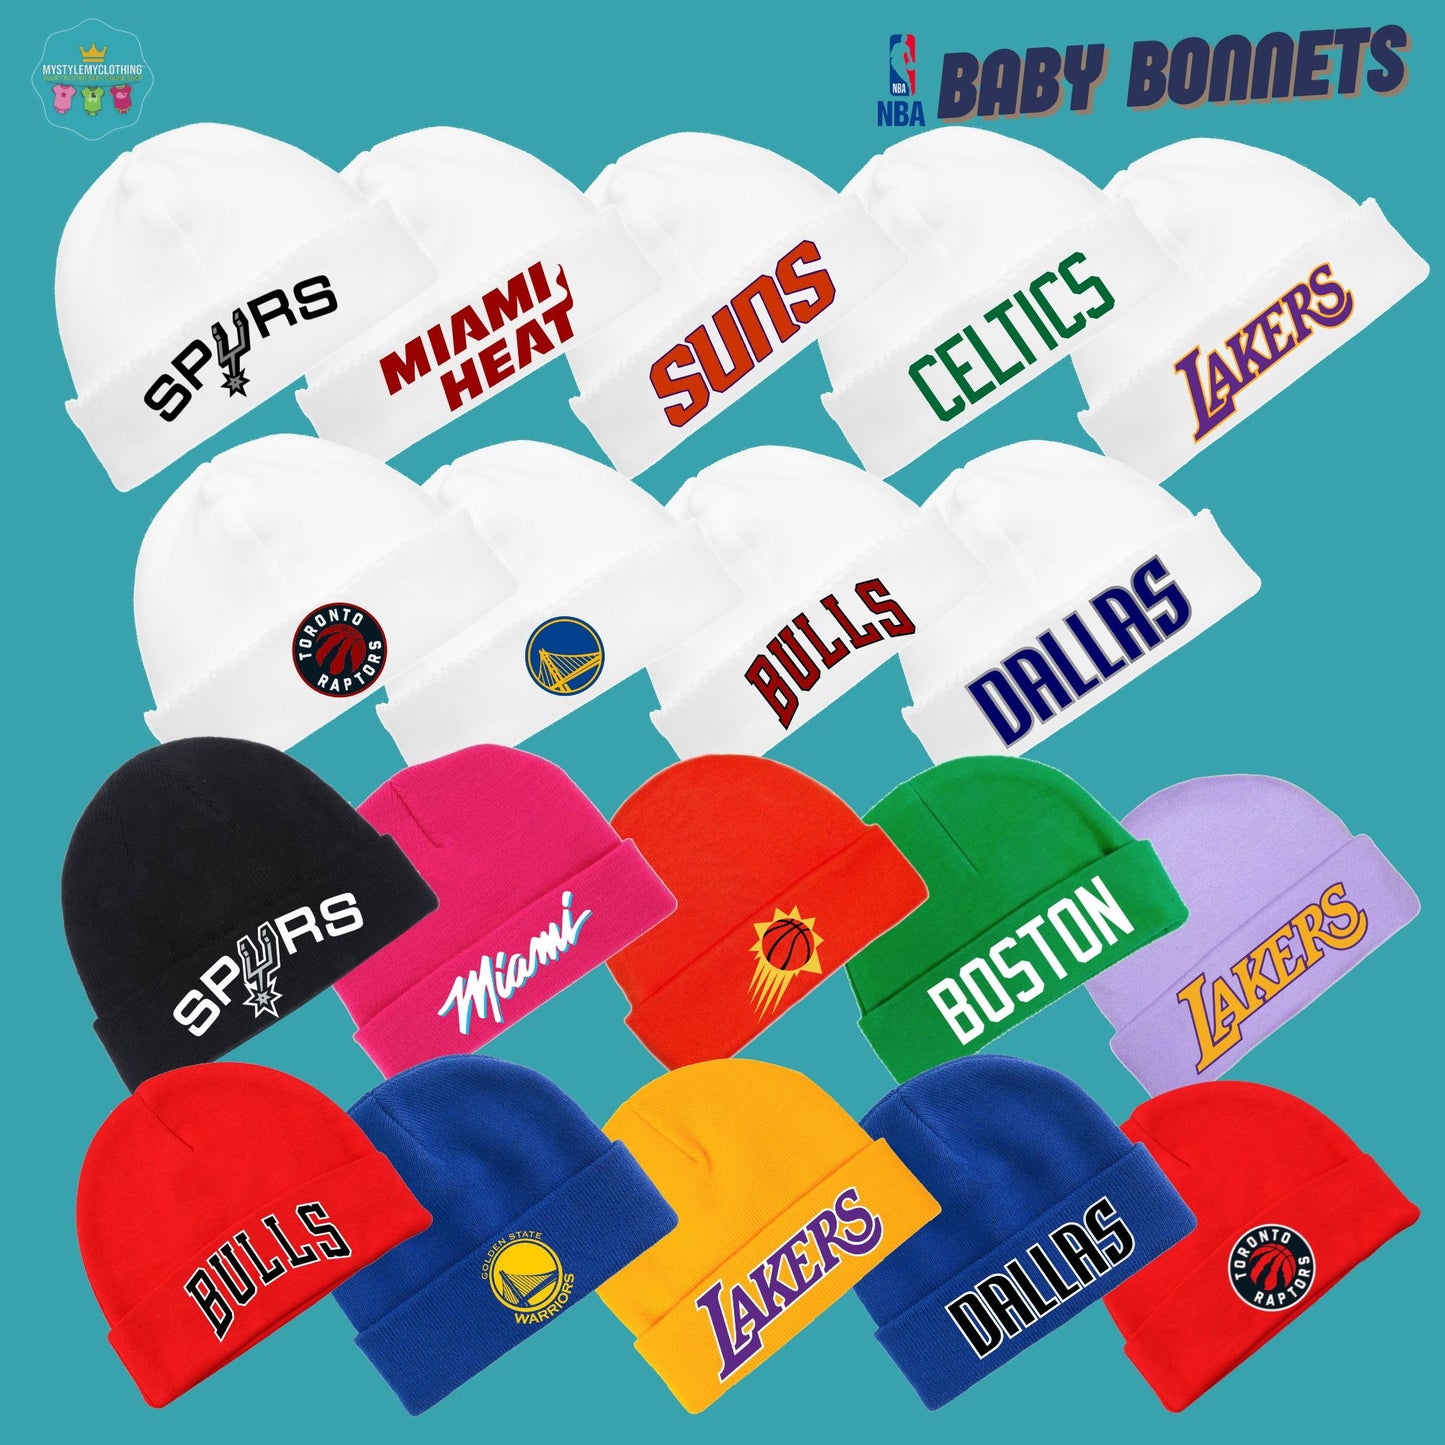 Baby Basketball Bonnets - Boston